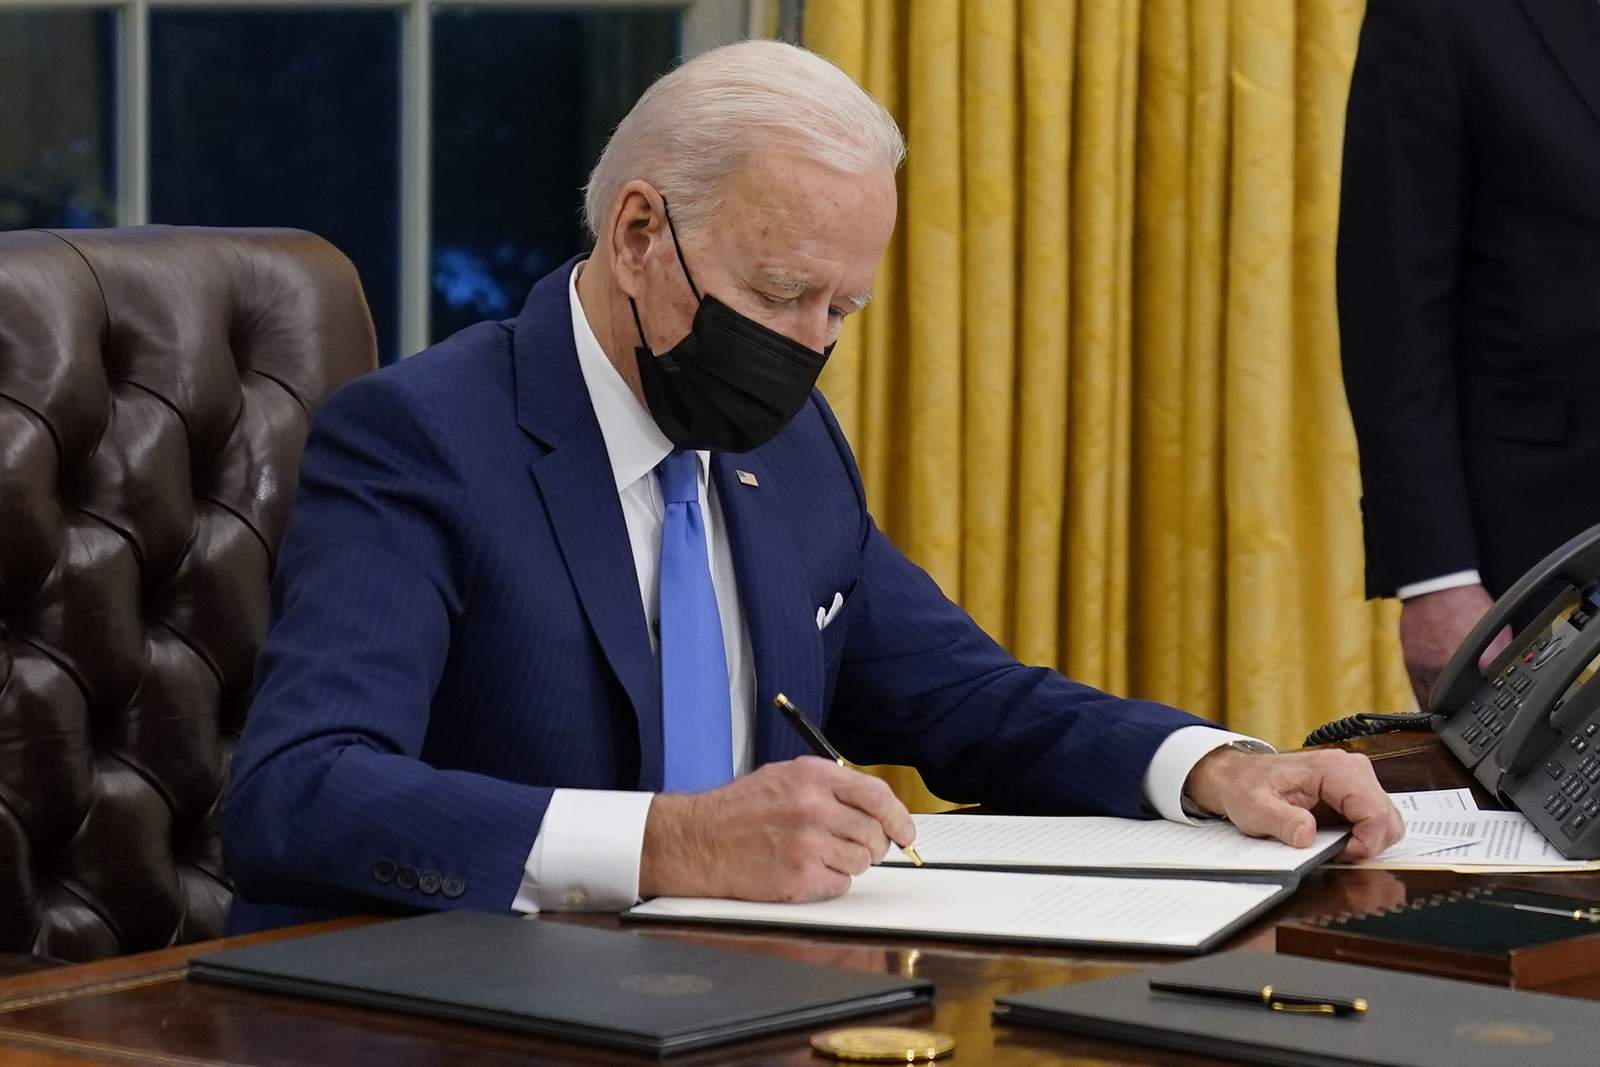 President Biden expands quick bid to undo Trump’s immigration policies